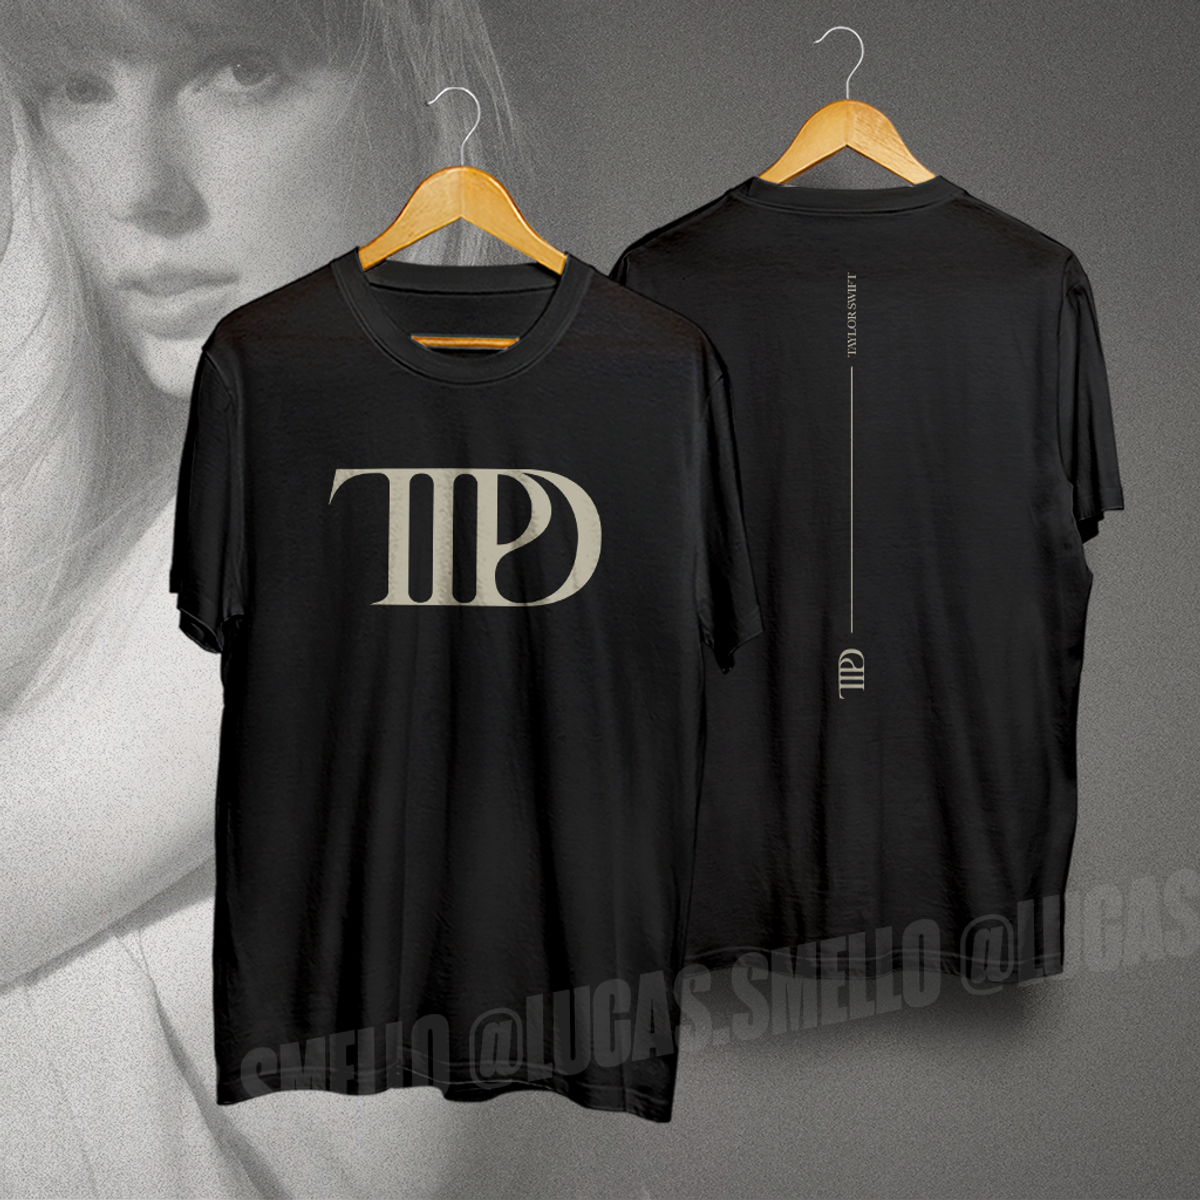 Nome do produto: Camiseta Taylor Swift TTPD